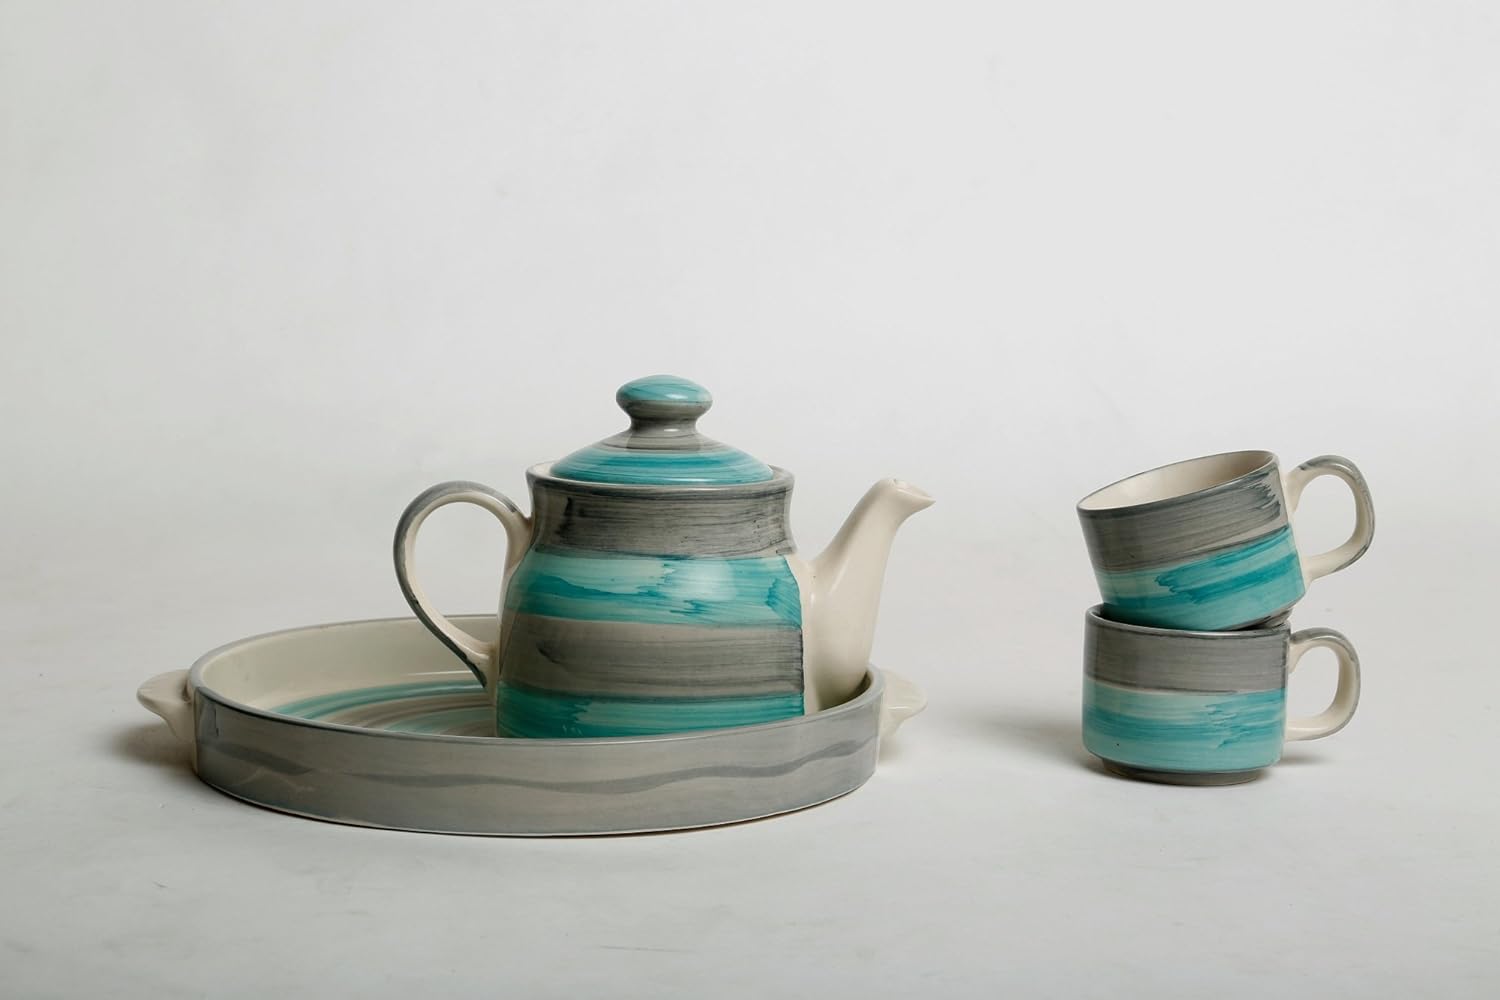 Caffeine Ceramic Handpainted sea Green & Gray Tea Tray Set (6pc) - Caffeine Premium Stoneware